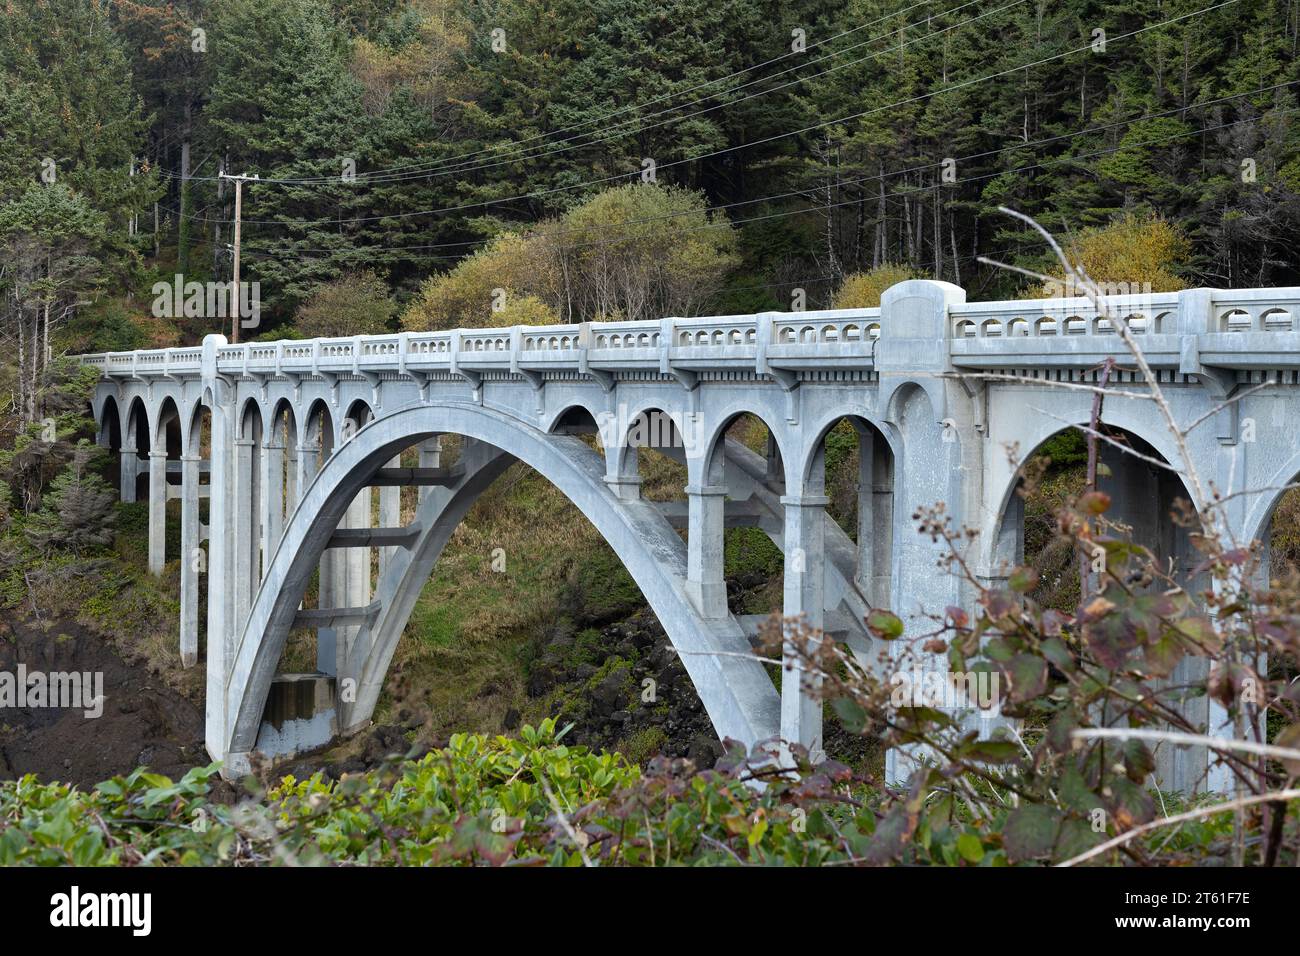 Rocky Creek Bridge No. 01089, auch bekannt als Ben Jones Bridge, in Otter Rock, Oregon. Stockfoto